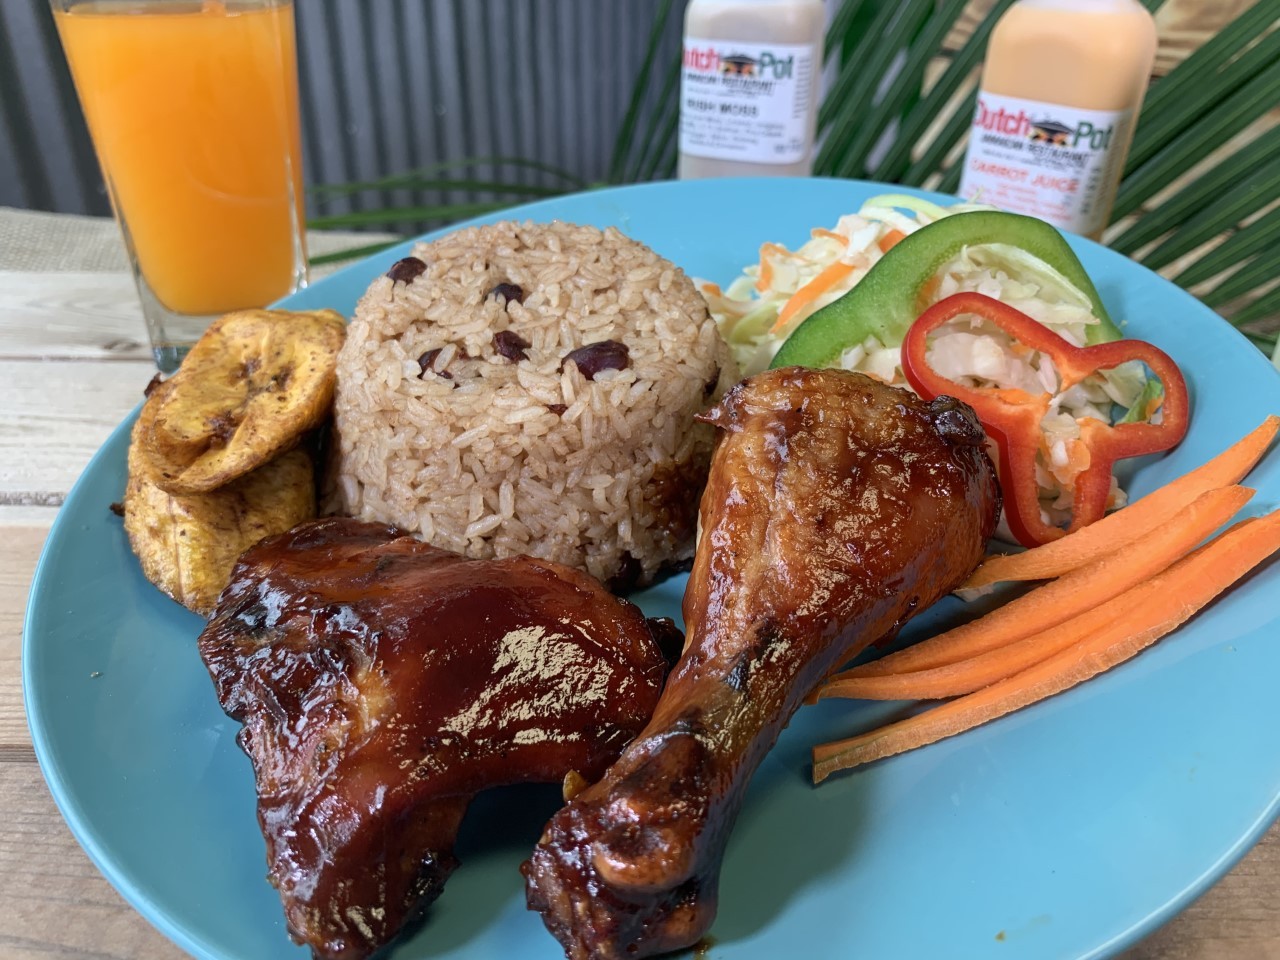 The Dutch Pot Jamaican Restaurant, Pembroke Pines - FL